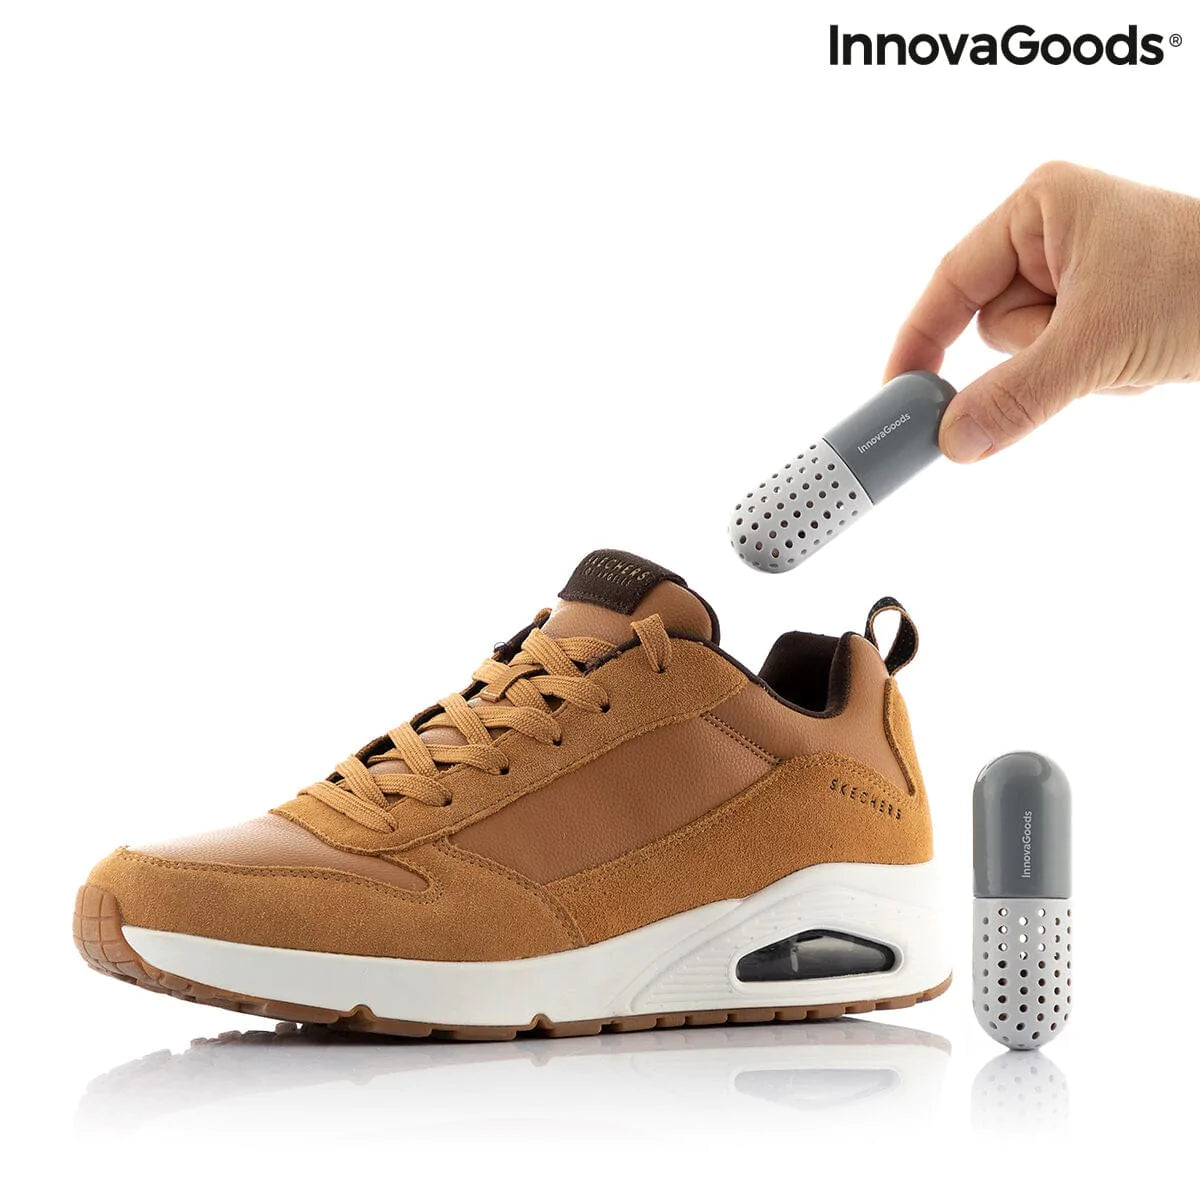 InnovaGoods Mode | Accessoires > Kleidung und Schuhe > Schuhe und Accessoires Deo-Kapseln für Schuhe Froes InnovaGoods 2 Stück